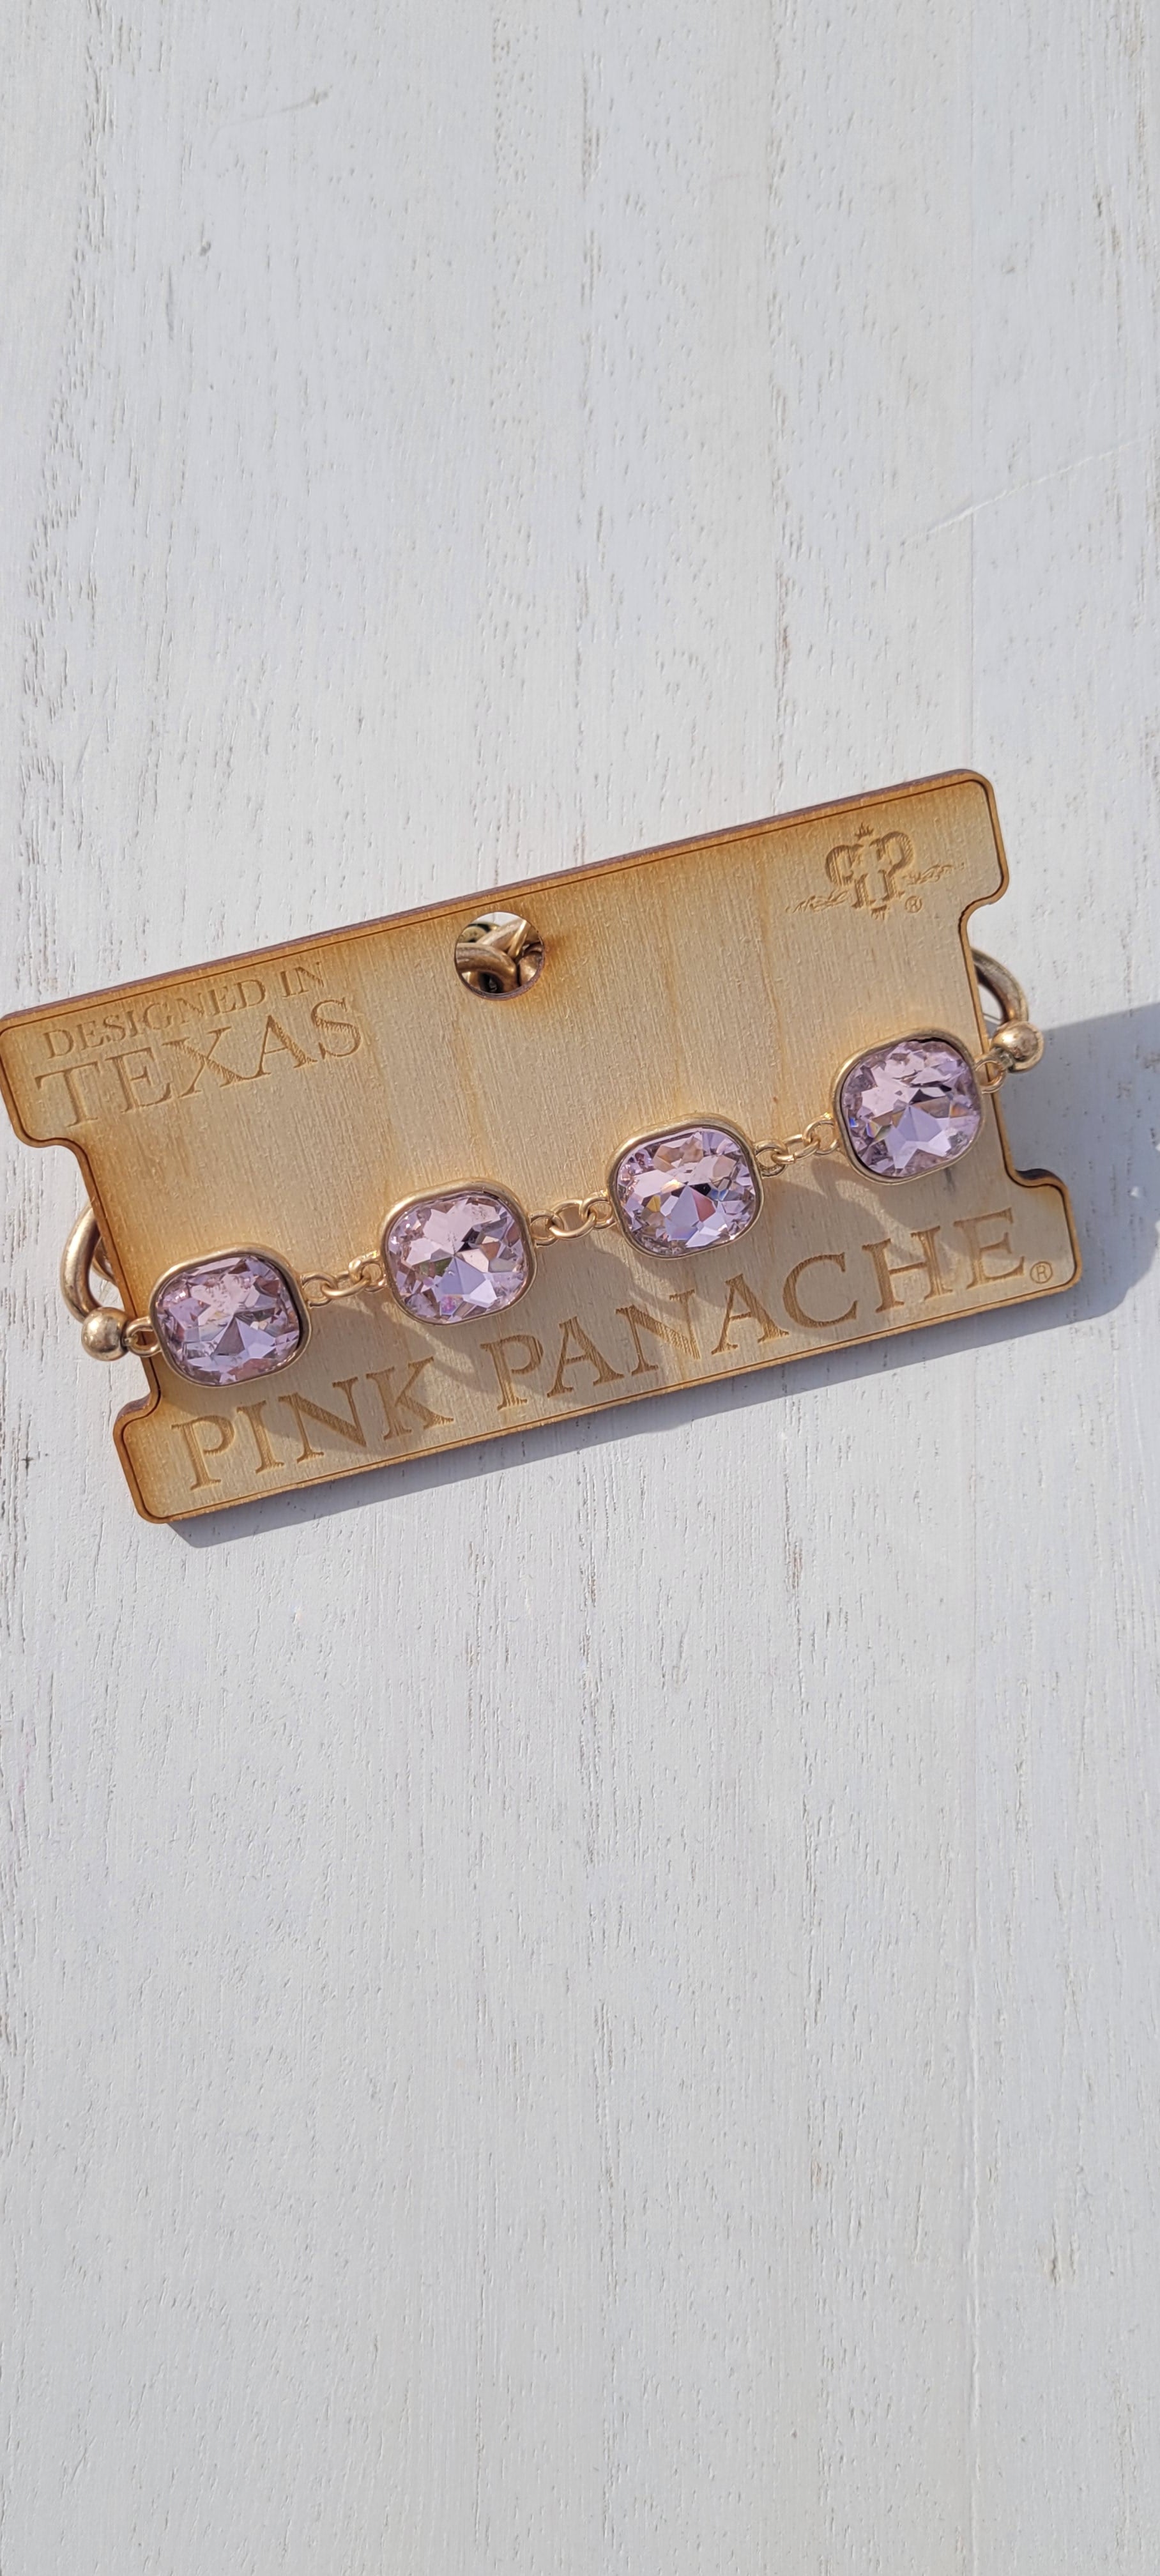 Pink Panache: Rose Pink Panache bracelet Color: Light pink square rhinestone and gold chain stretch bracelet Limited supply! Keywords: Bracelet, Jewelry